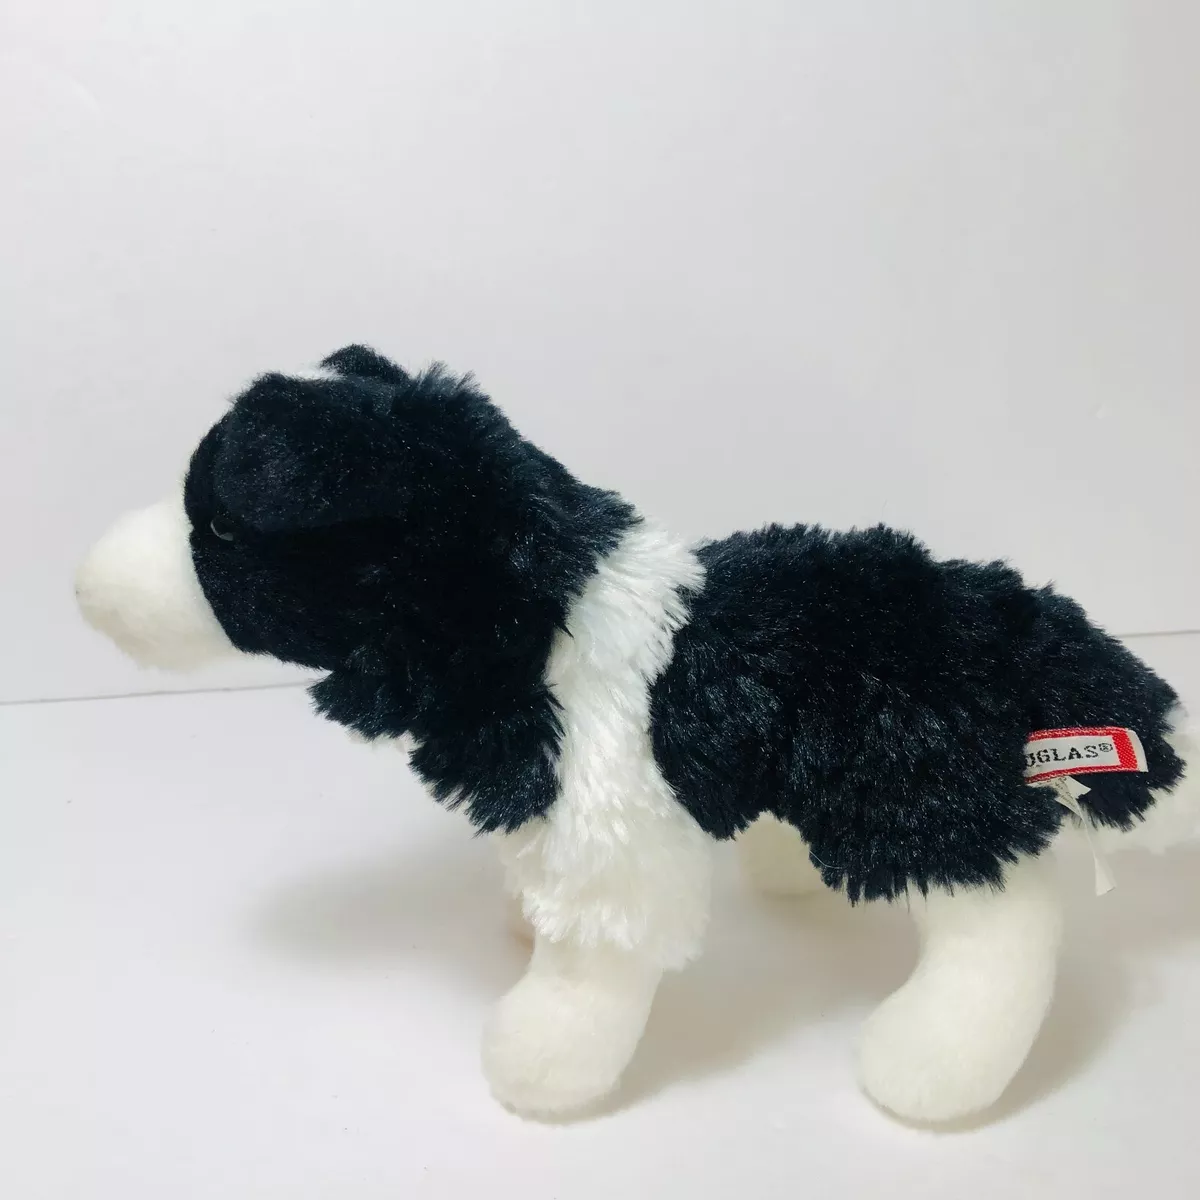 MEADOW THE BORDER COLLIE Dog Plush Stuffed Animal - Douglas Cuddle Toys -  #4009